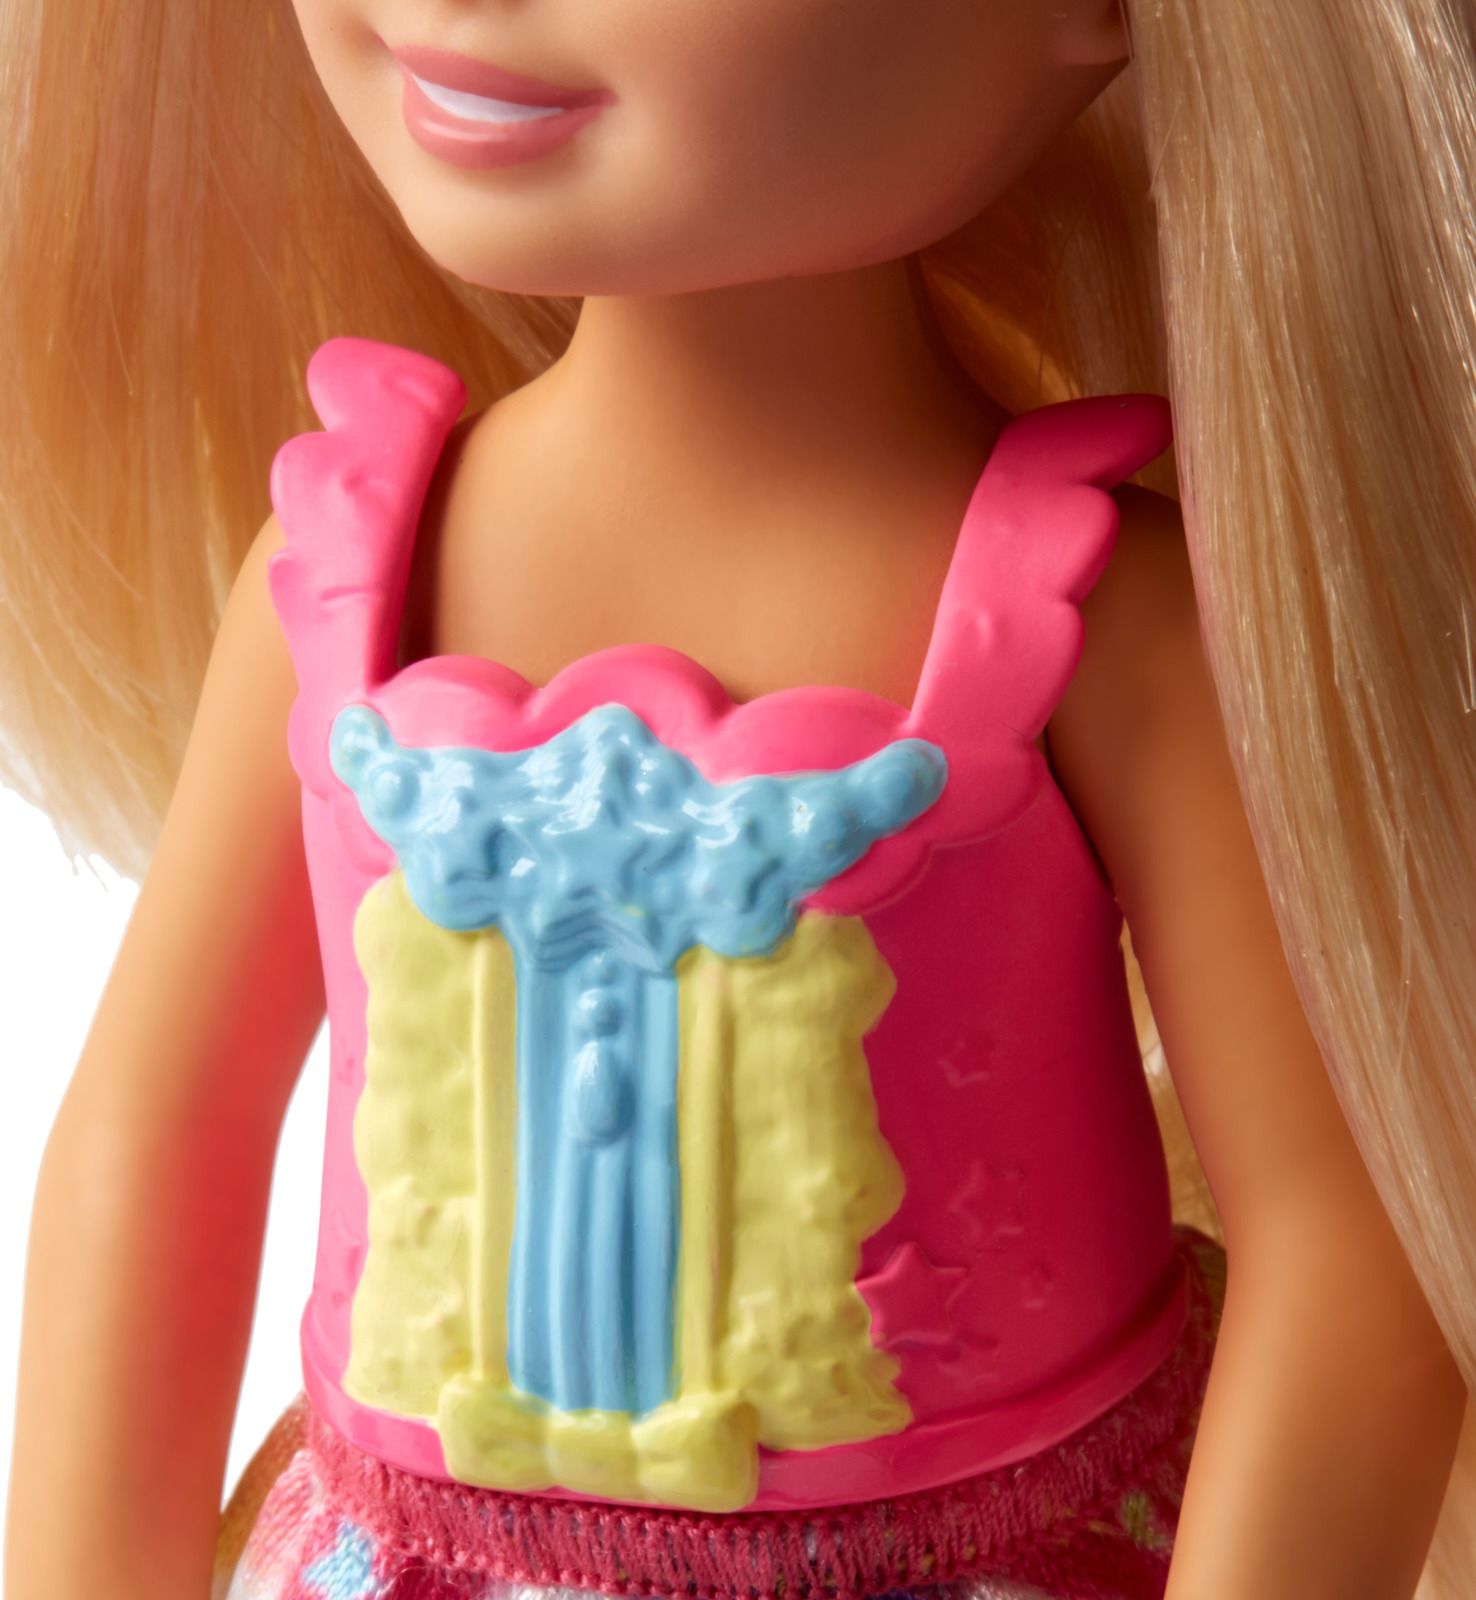 Barbie    